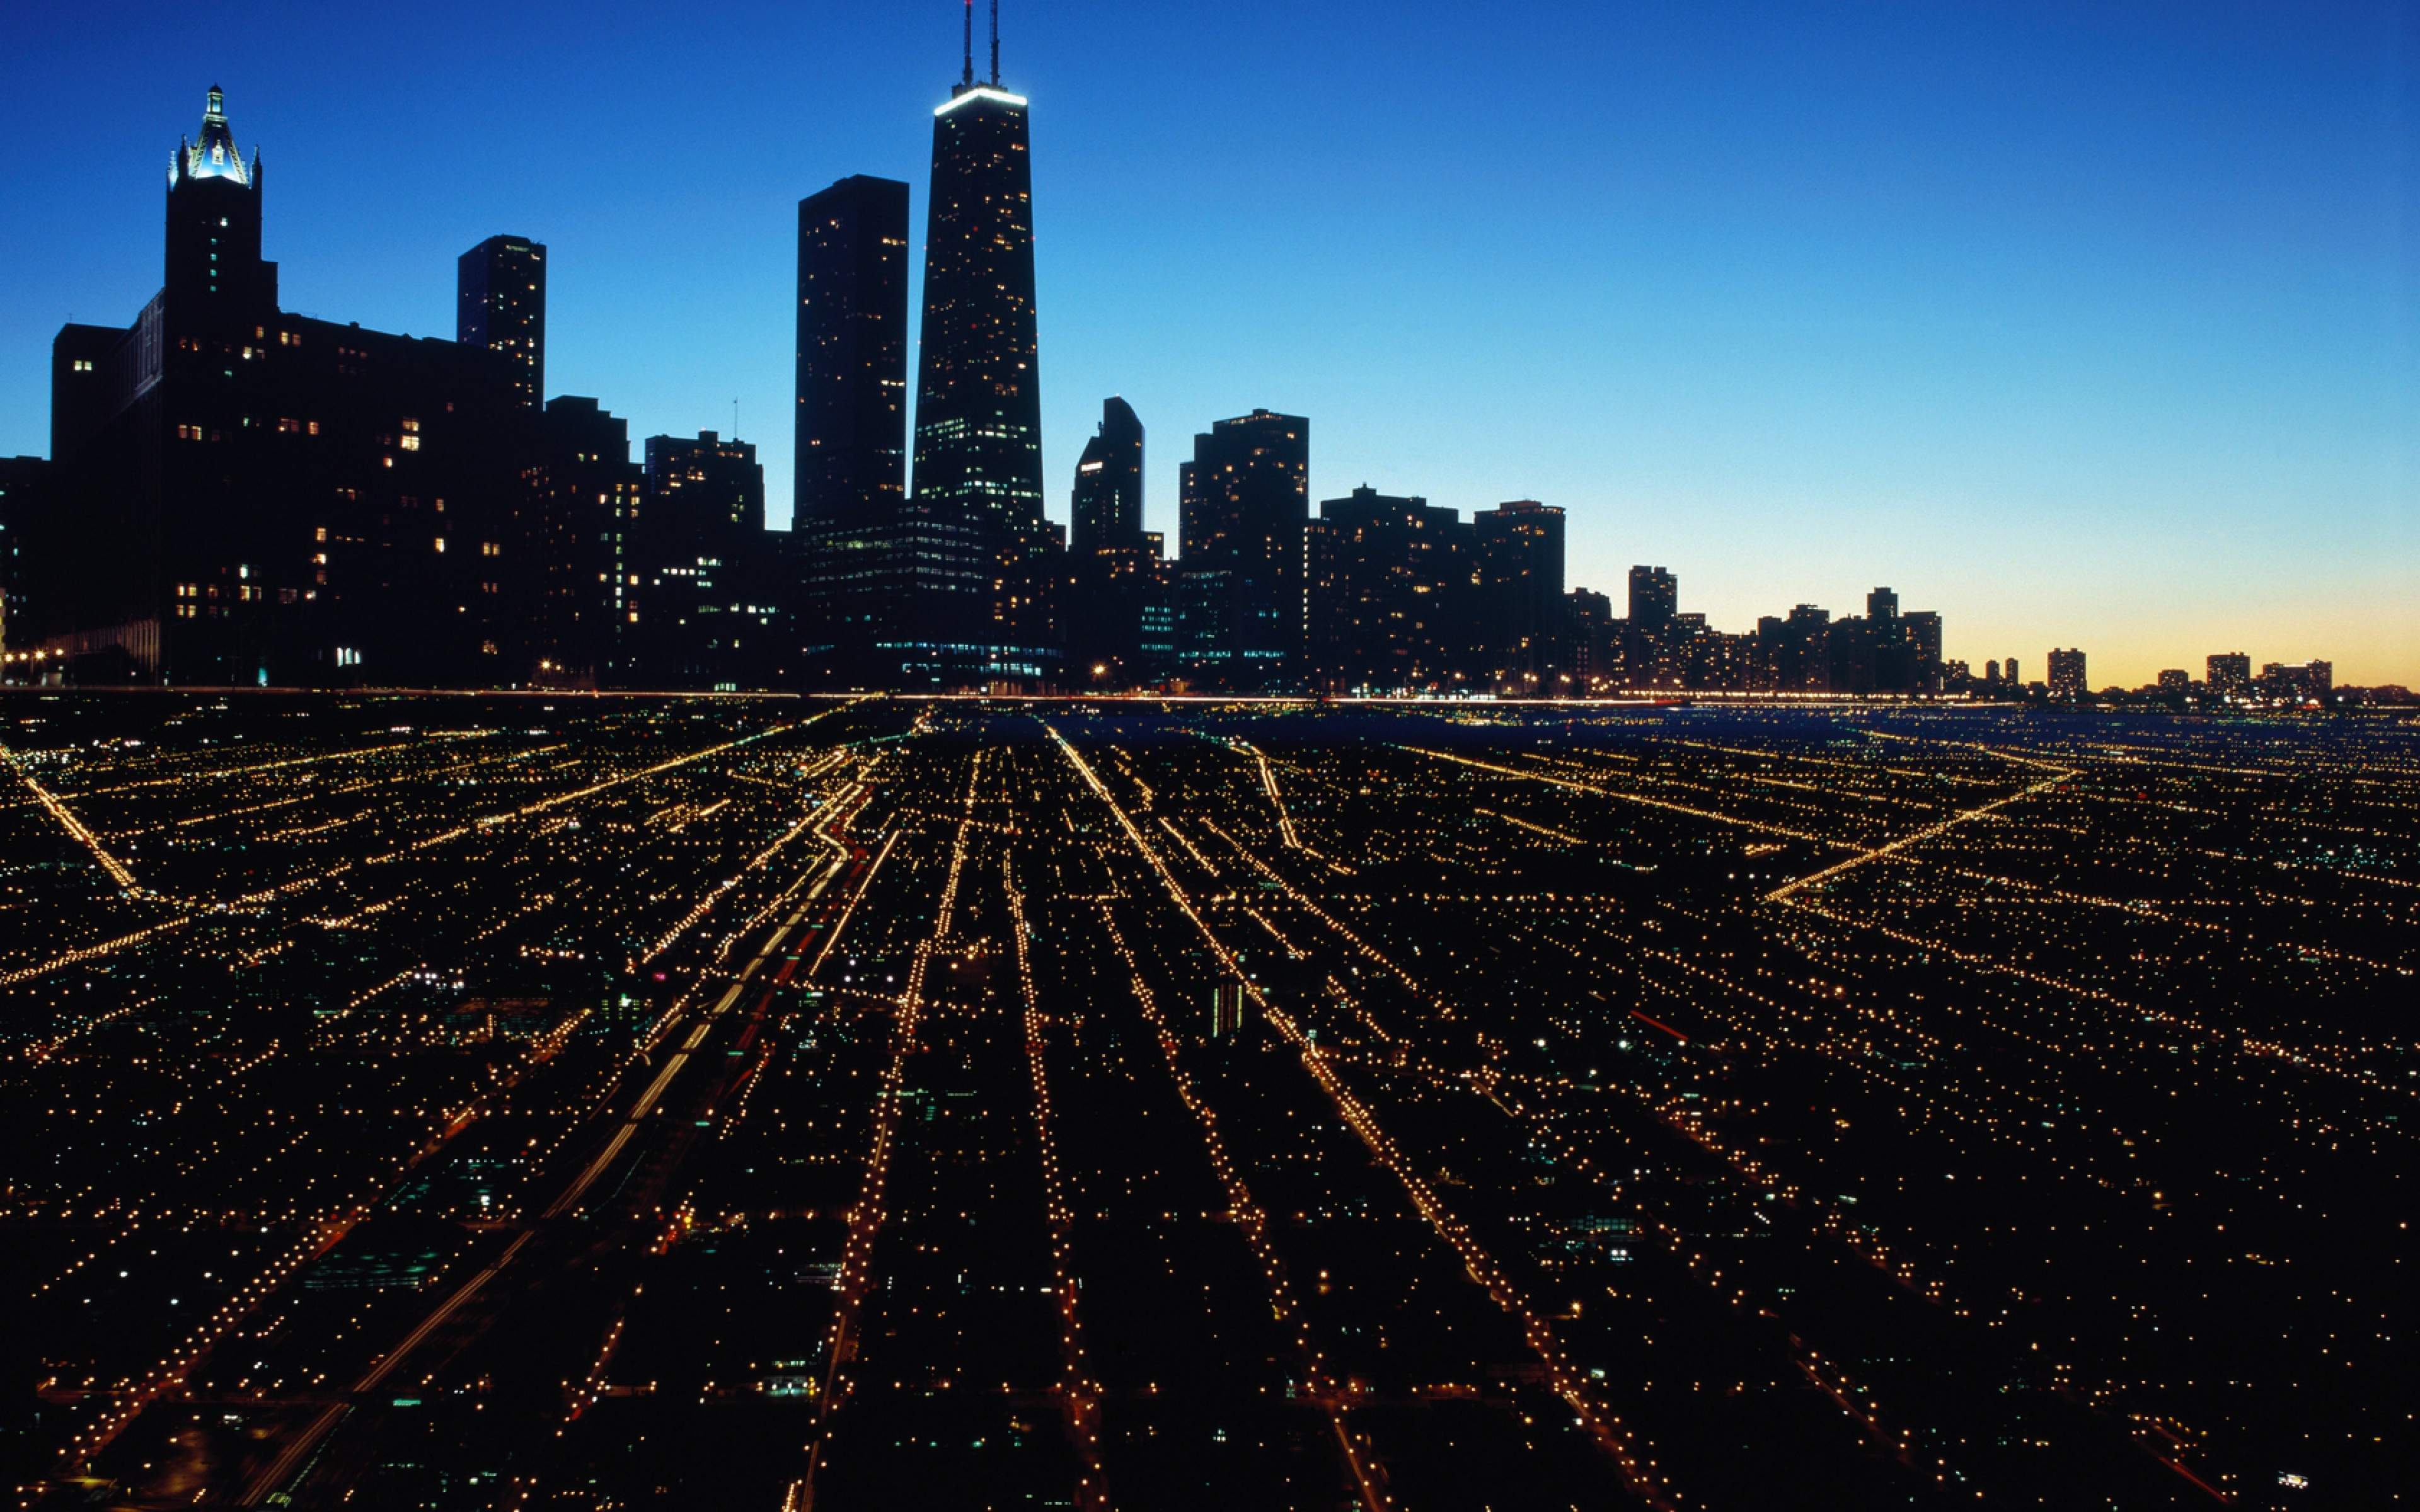  Chicago City Night Lights city Wallpaper Background Ultra HD 4K 3840x2400